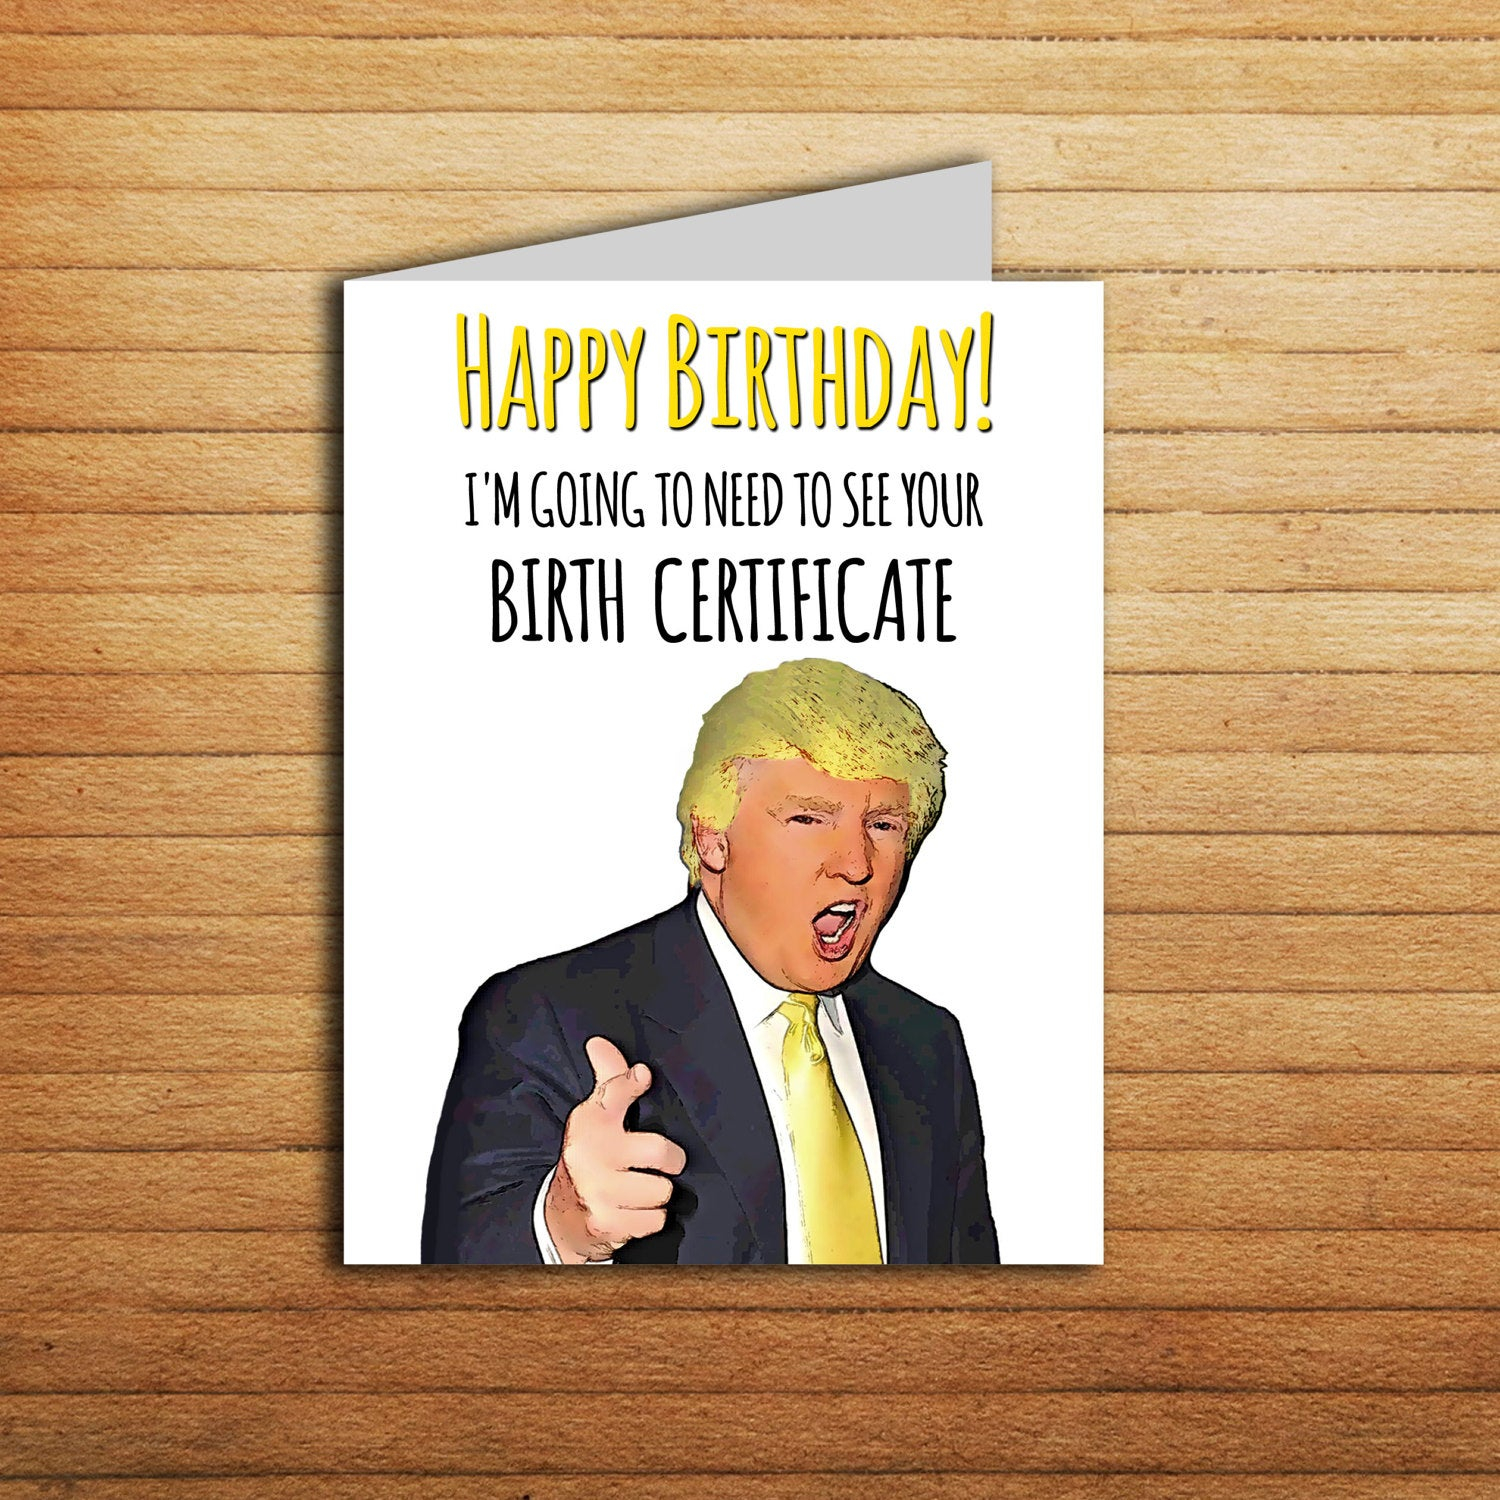 40Th Birthday Card Ideas For Men Donald Trump Card Birth Certificate Birthday Card Printable Funny Card For Boyfriend Gift For Best Friend 40th Birthday 30 Bday Pop Culture